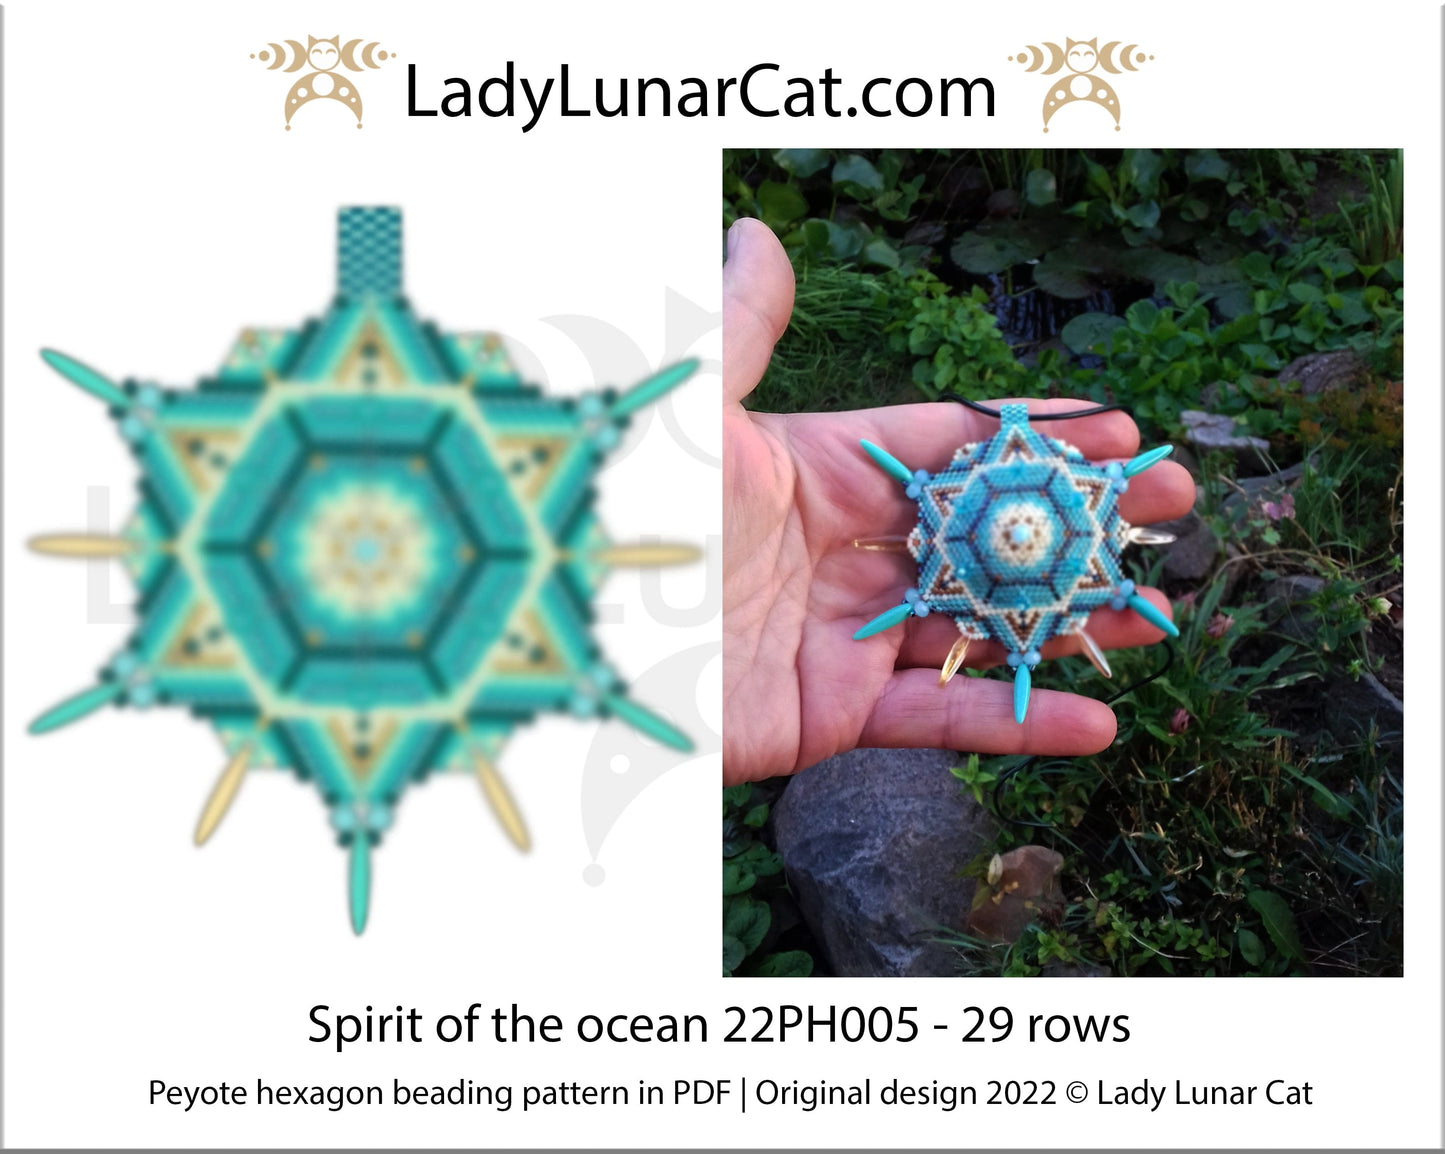 Peyote hexagon pattern for beading Spirit of the ocean 22PH005 LadyLunarCat